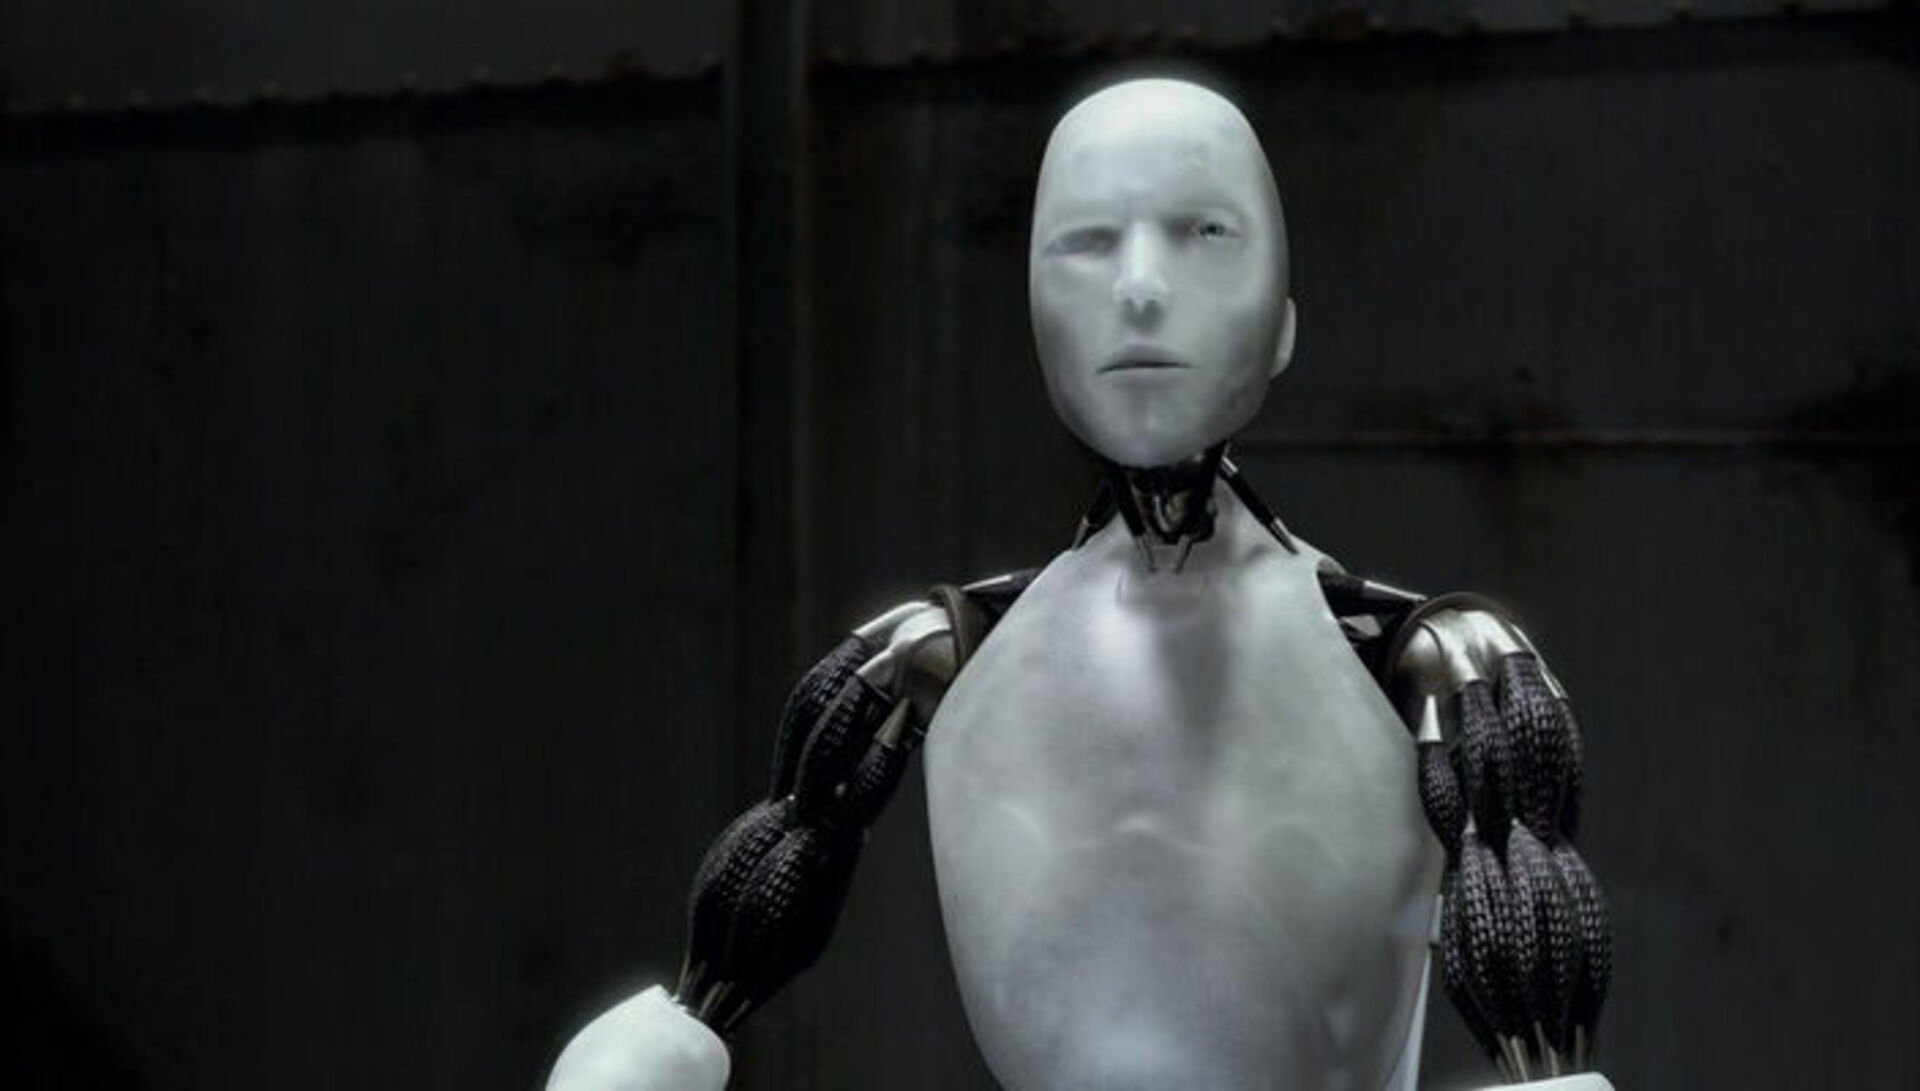 Z hj jn. Уилл Смит и робот. Сонни ns5 - робот ("я - робот,2004).